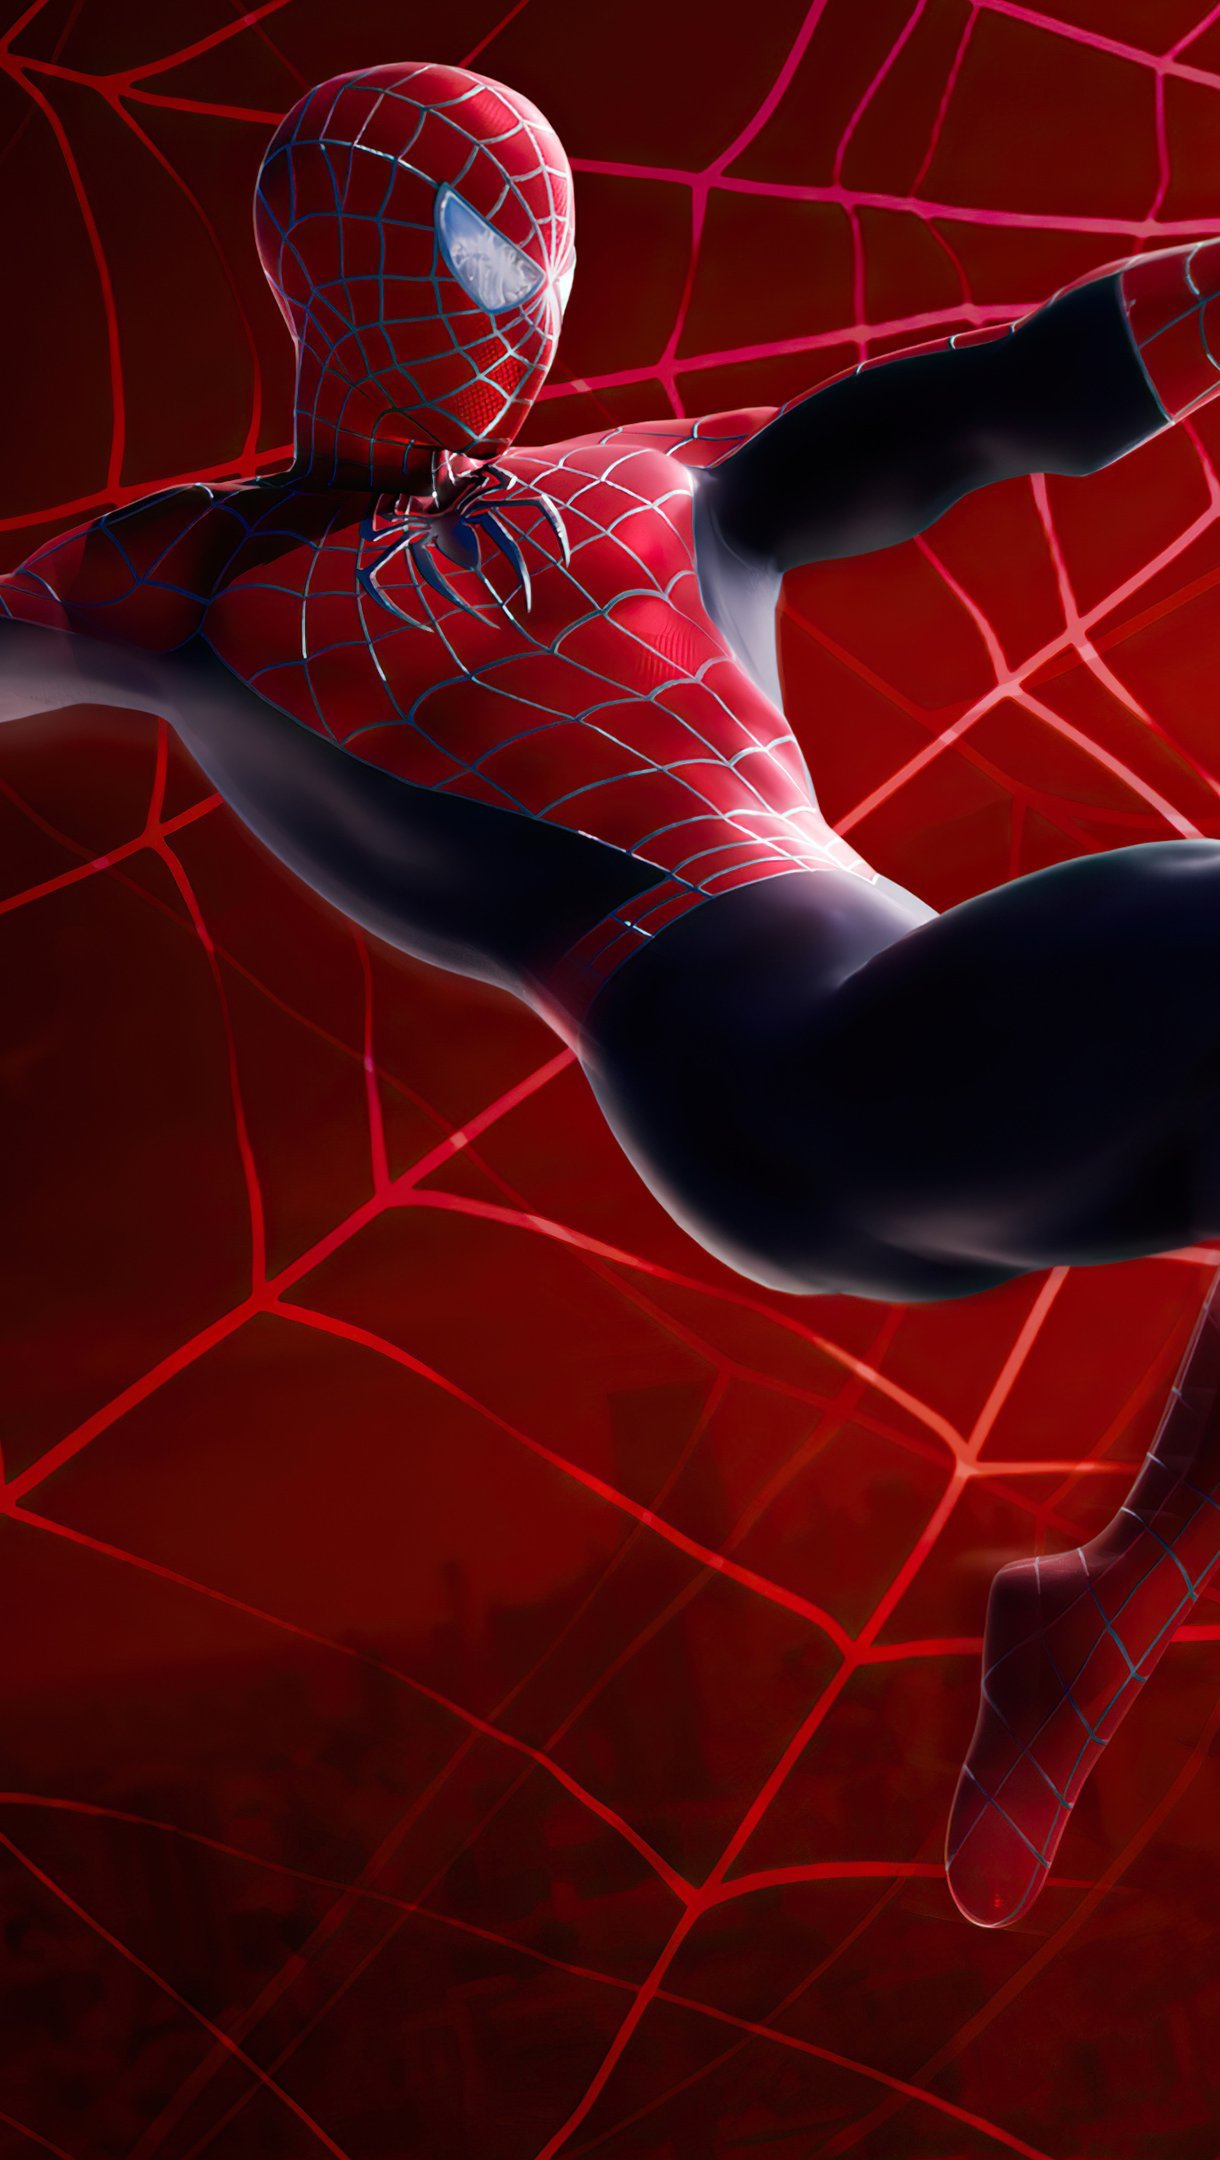 Spider Man Final Swing Wallpaper 4k Ultra HD ID:9636